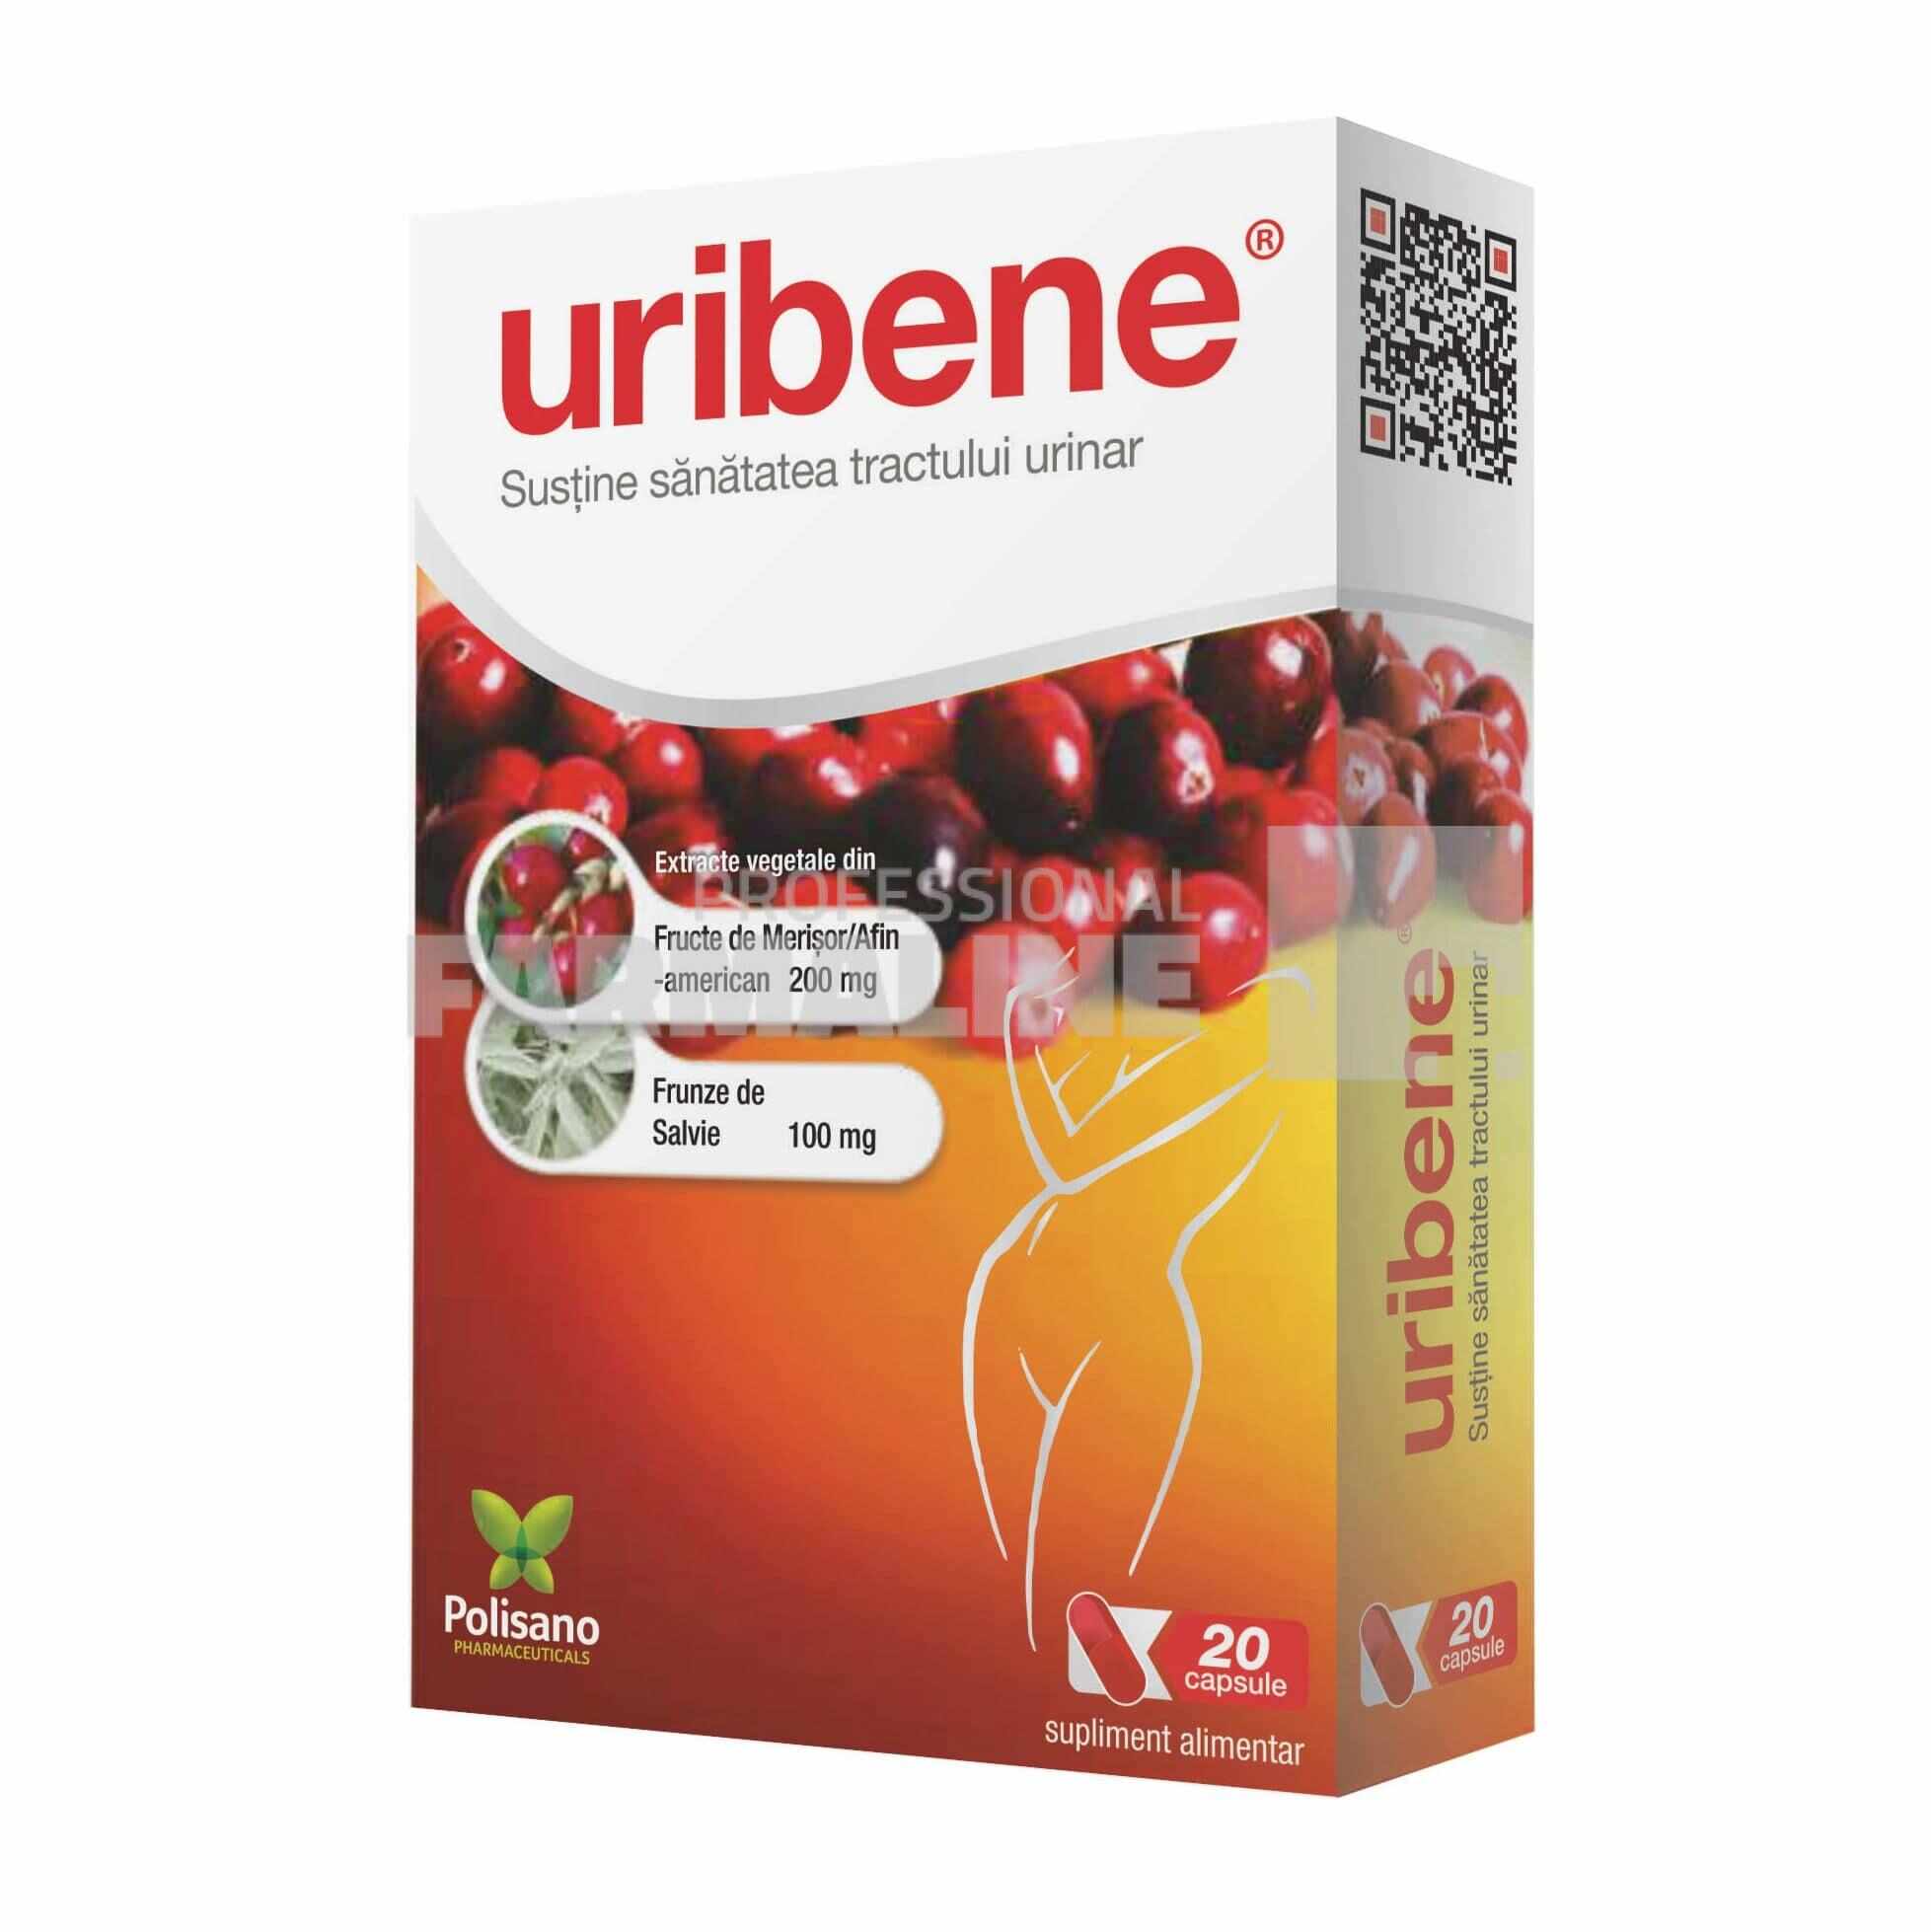 Uribene 20 capsule